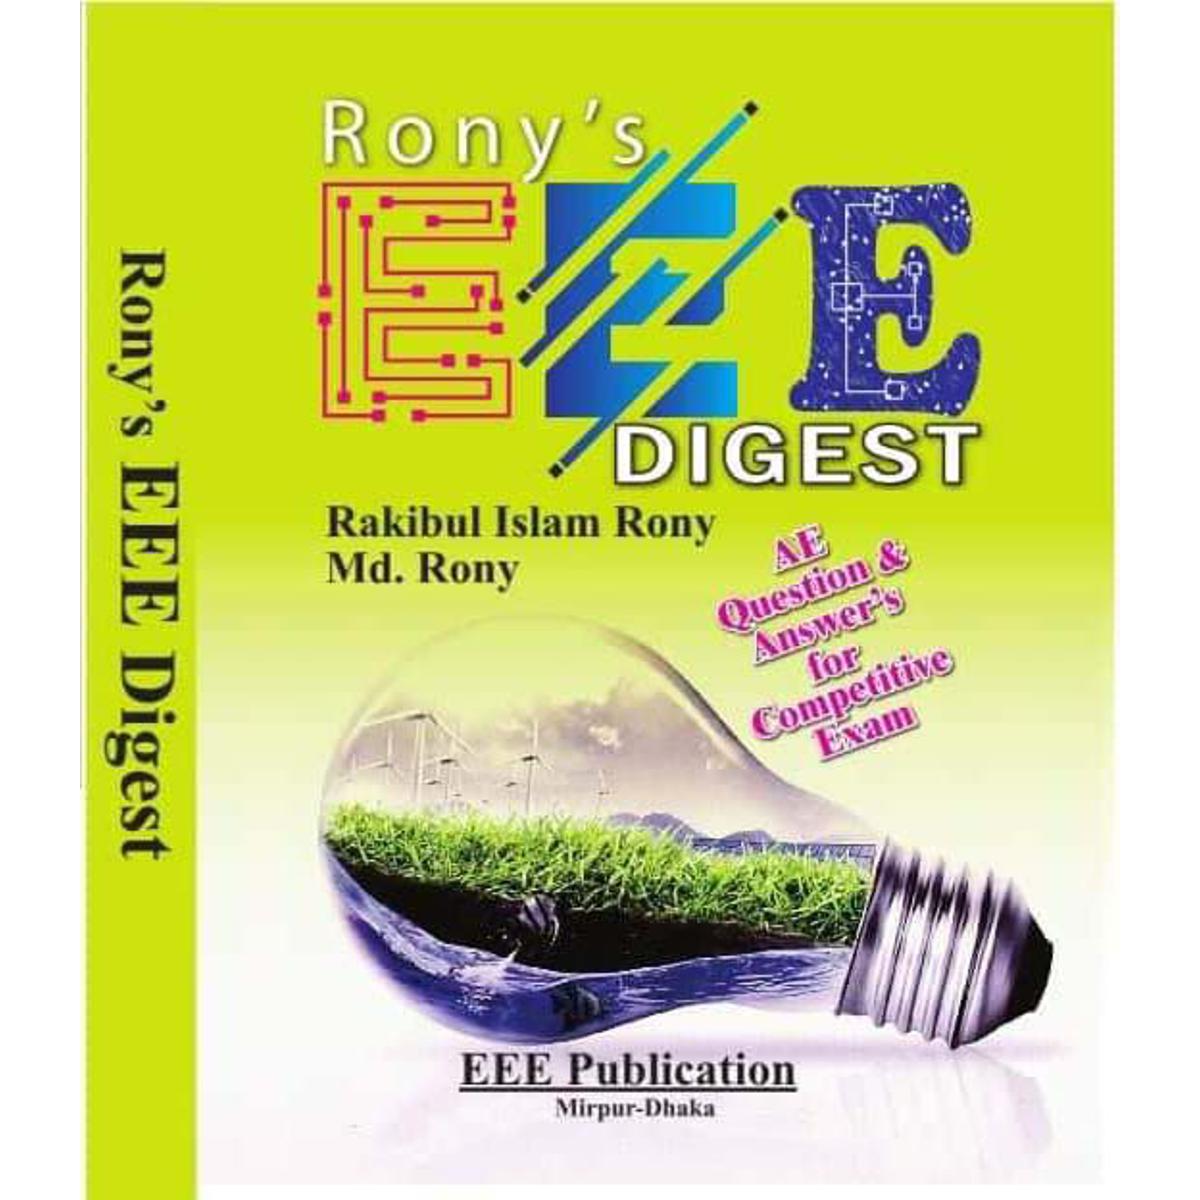 Rony's EEE Digest by Rakibul islam Rony